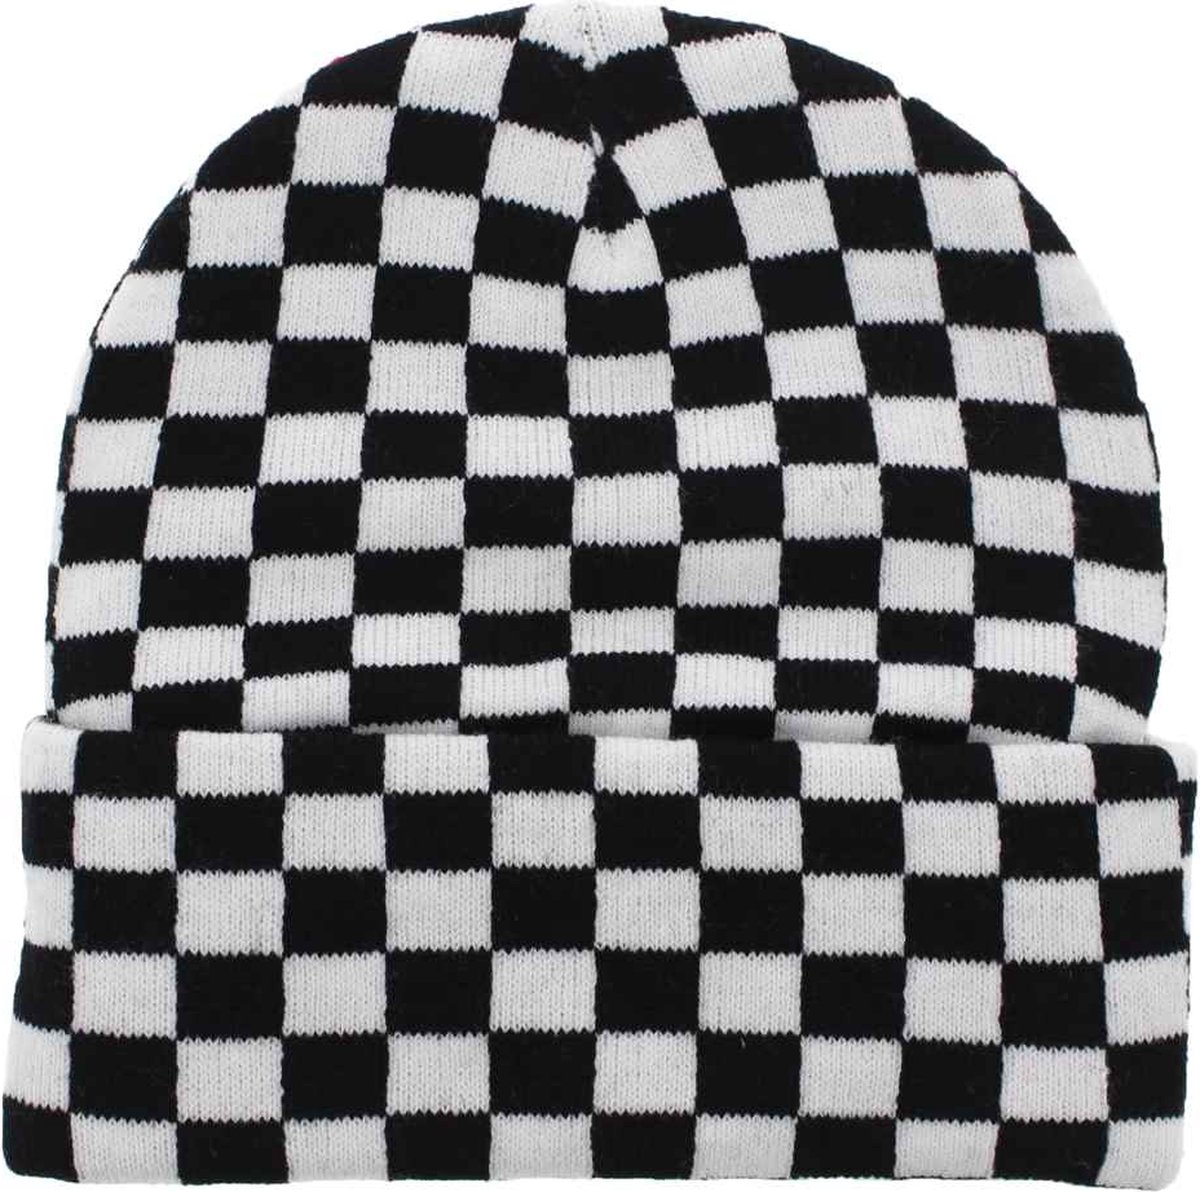 Zac's Alter Ego Beanie Muts Black & White Checkered Zwart/Wit